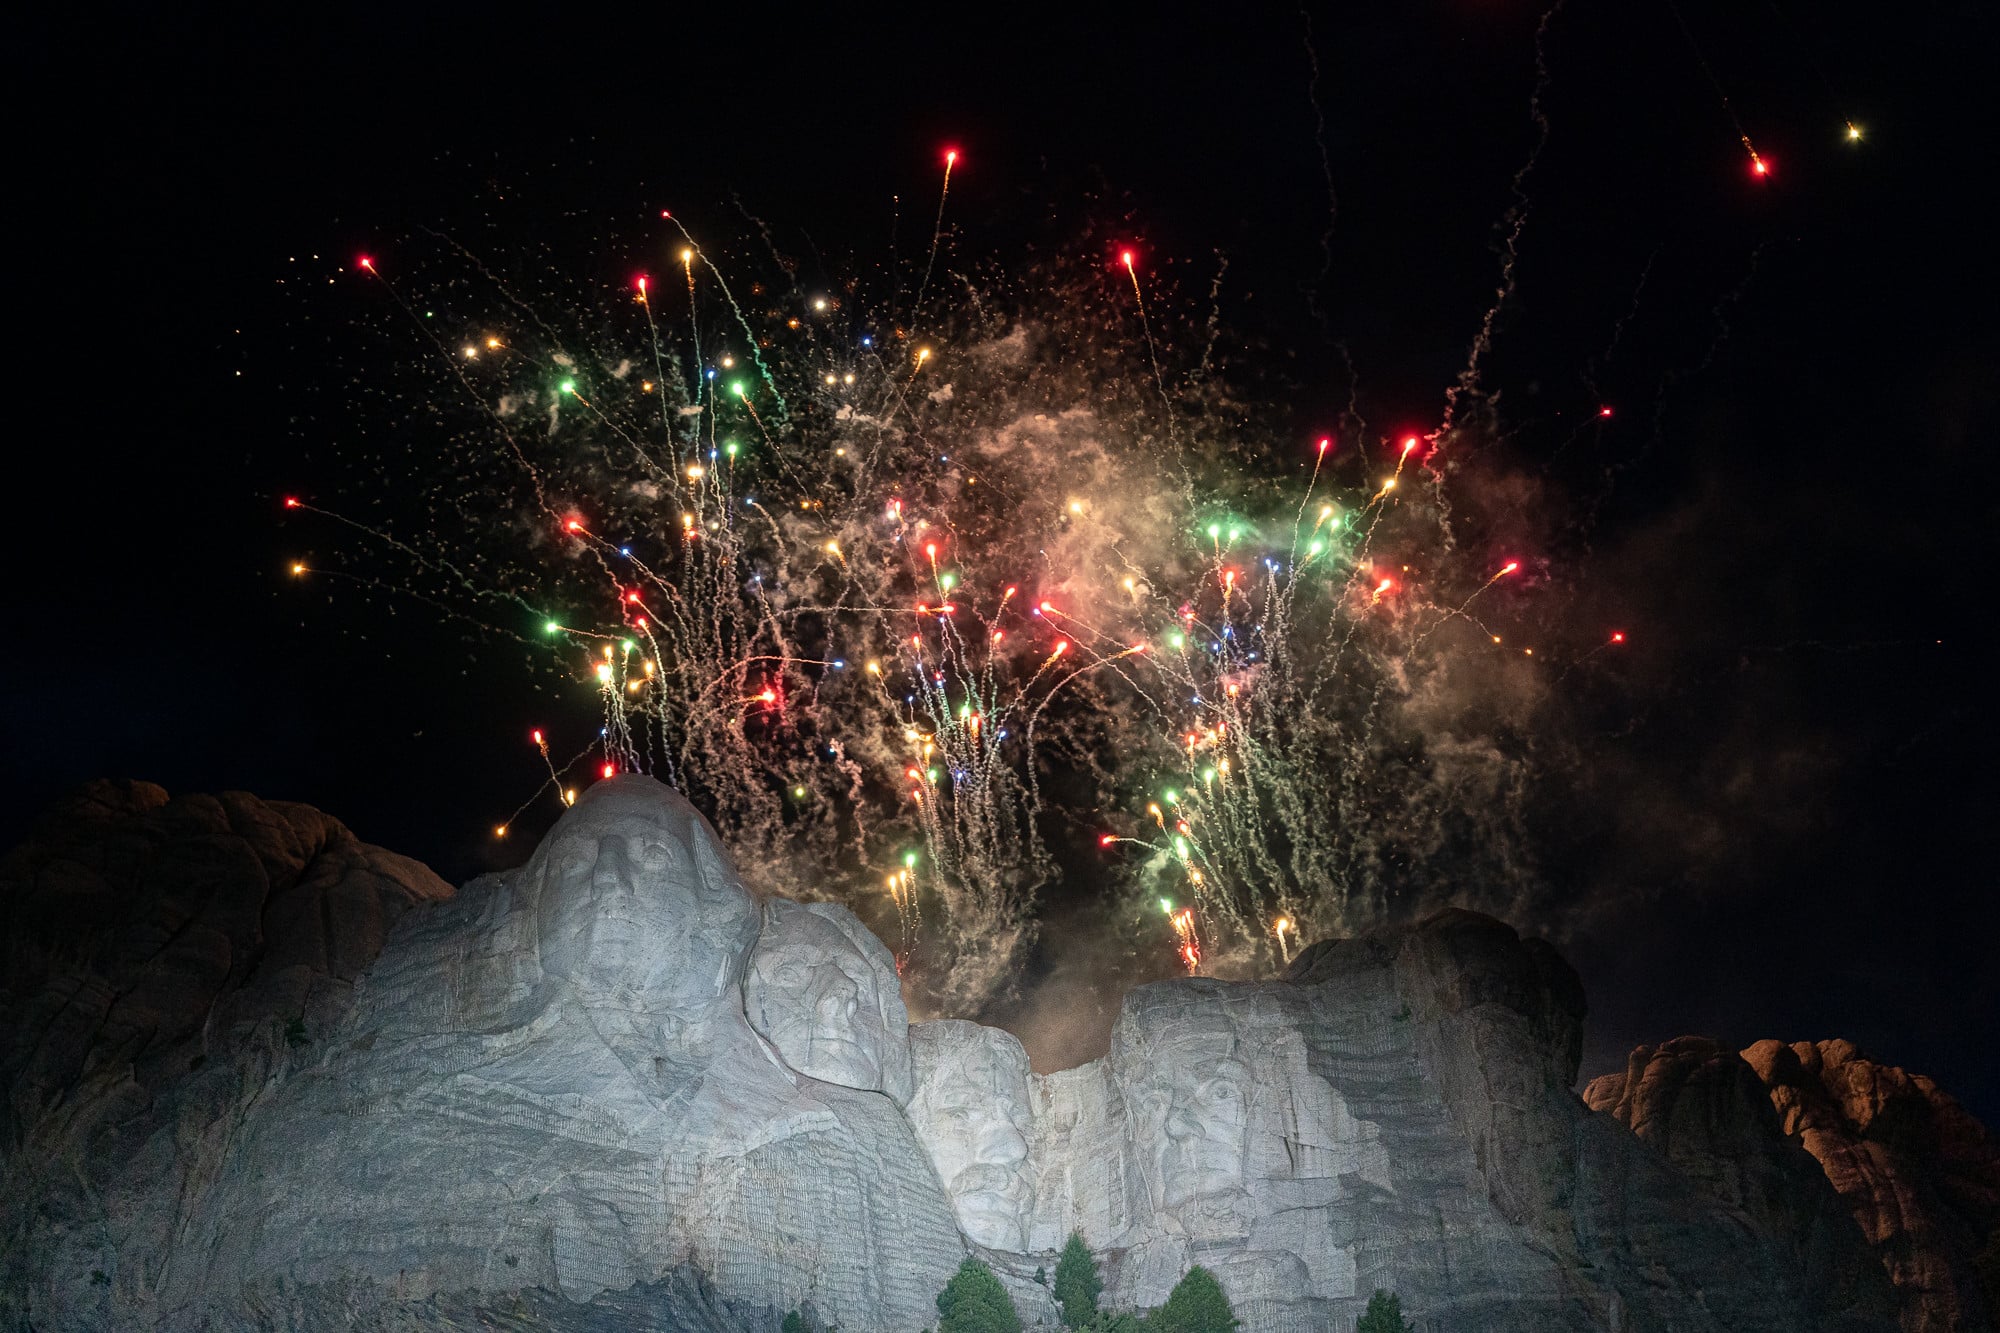 Firework contamination at Mount Rushmore National Memorial